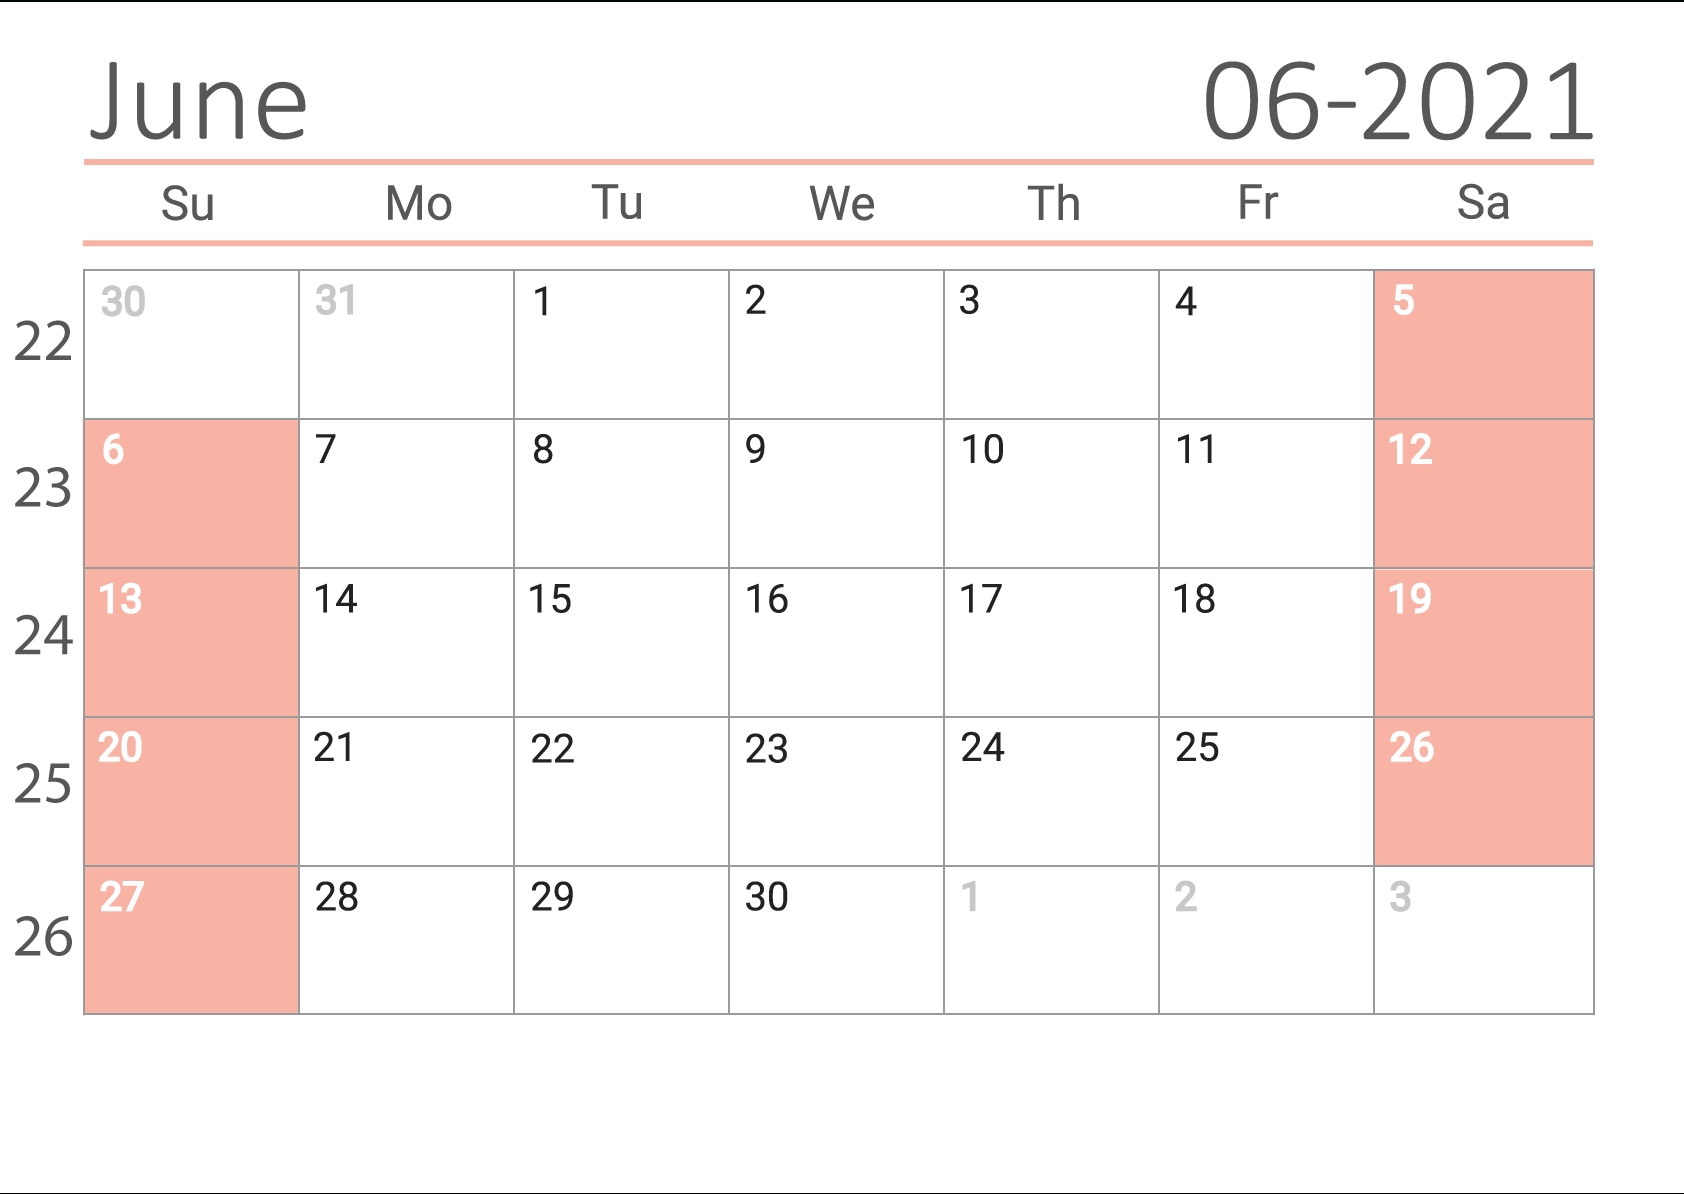 Free Download June 2021 Calendar Us Calendar From August 2020 To June 2021